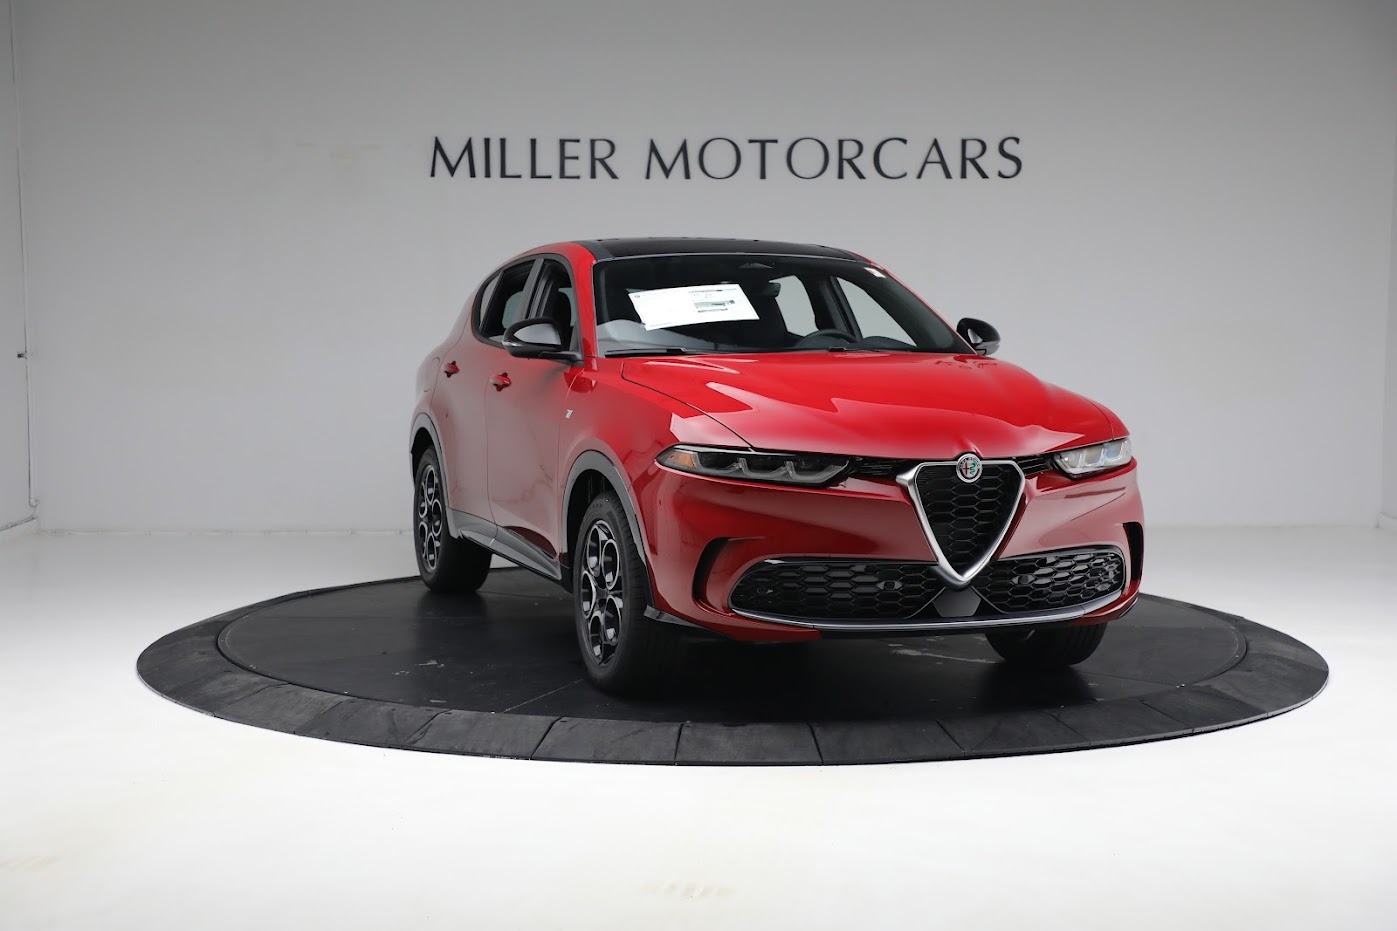 New 2024 Alfa Romeo Tonale Ti